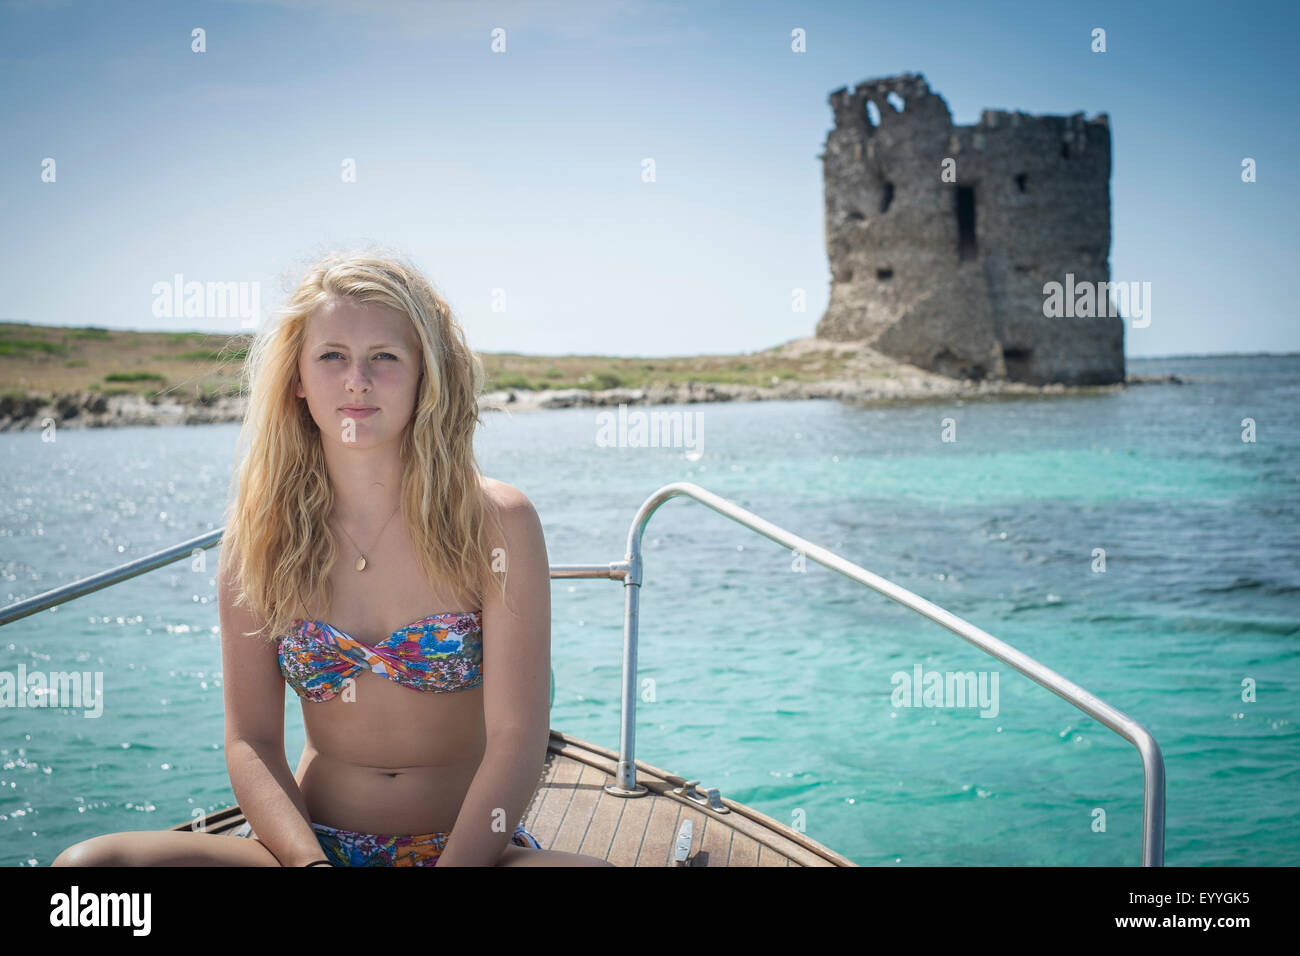 Smiling girl sunbathing on sailboat near ancient ruins Stock Photo